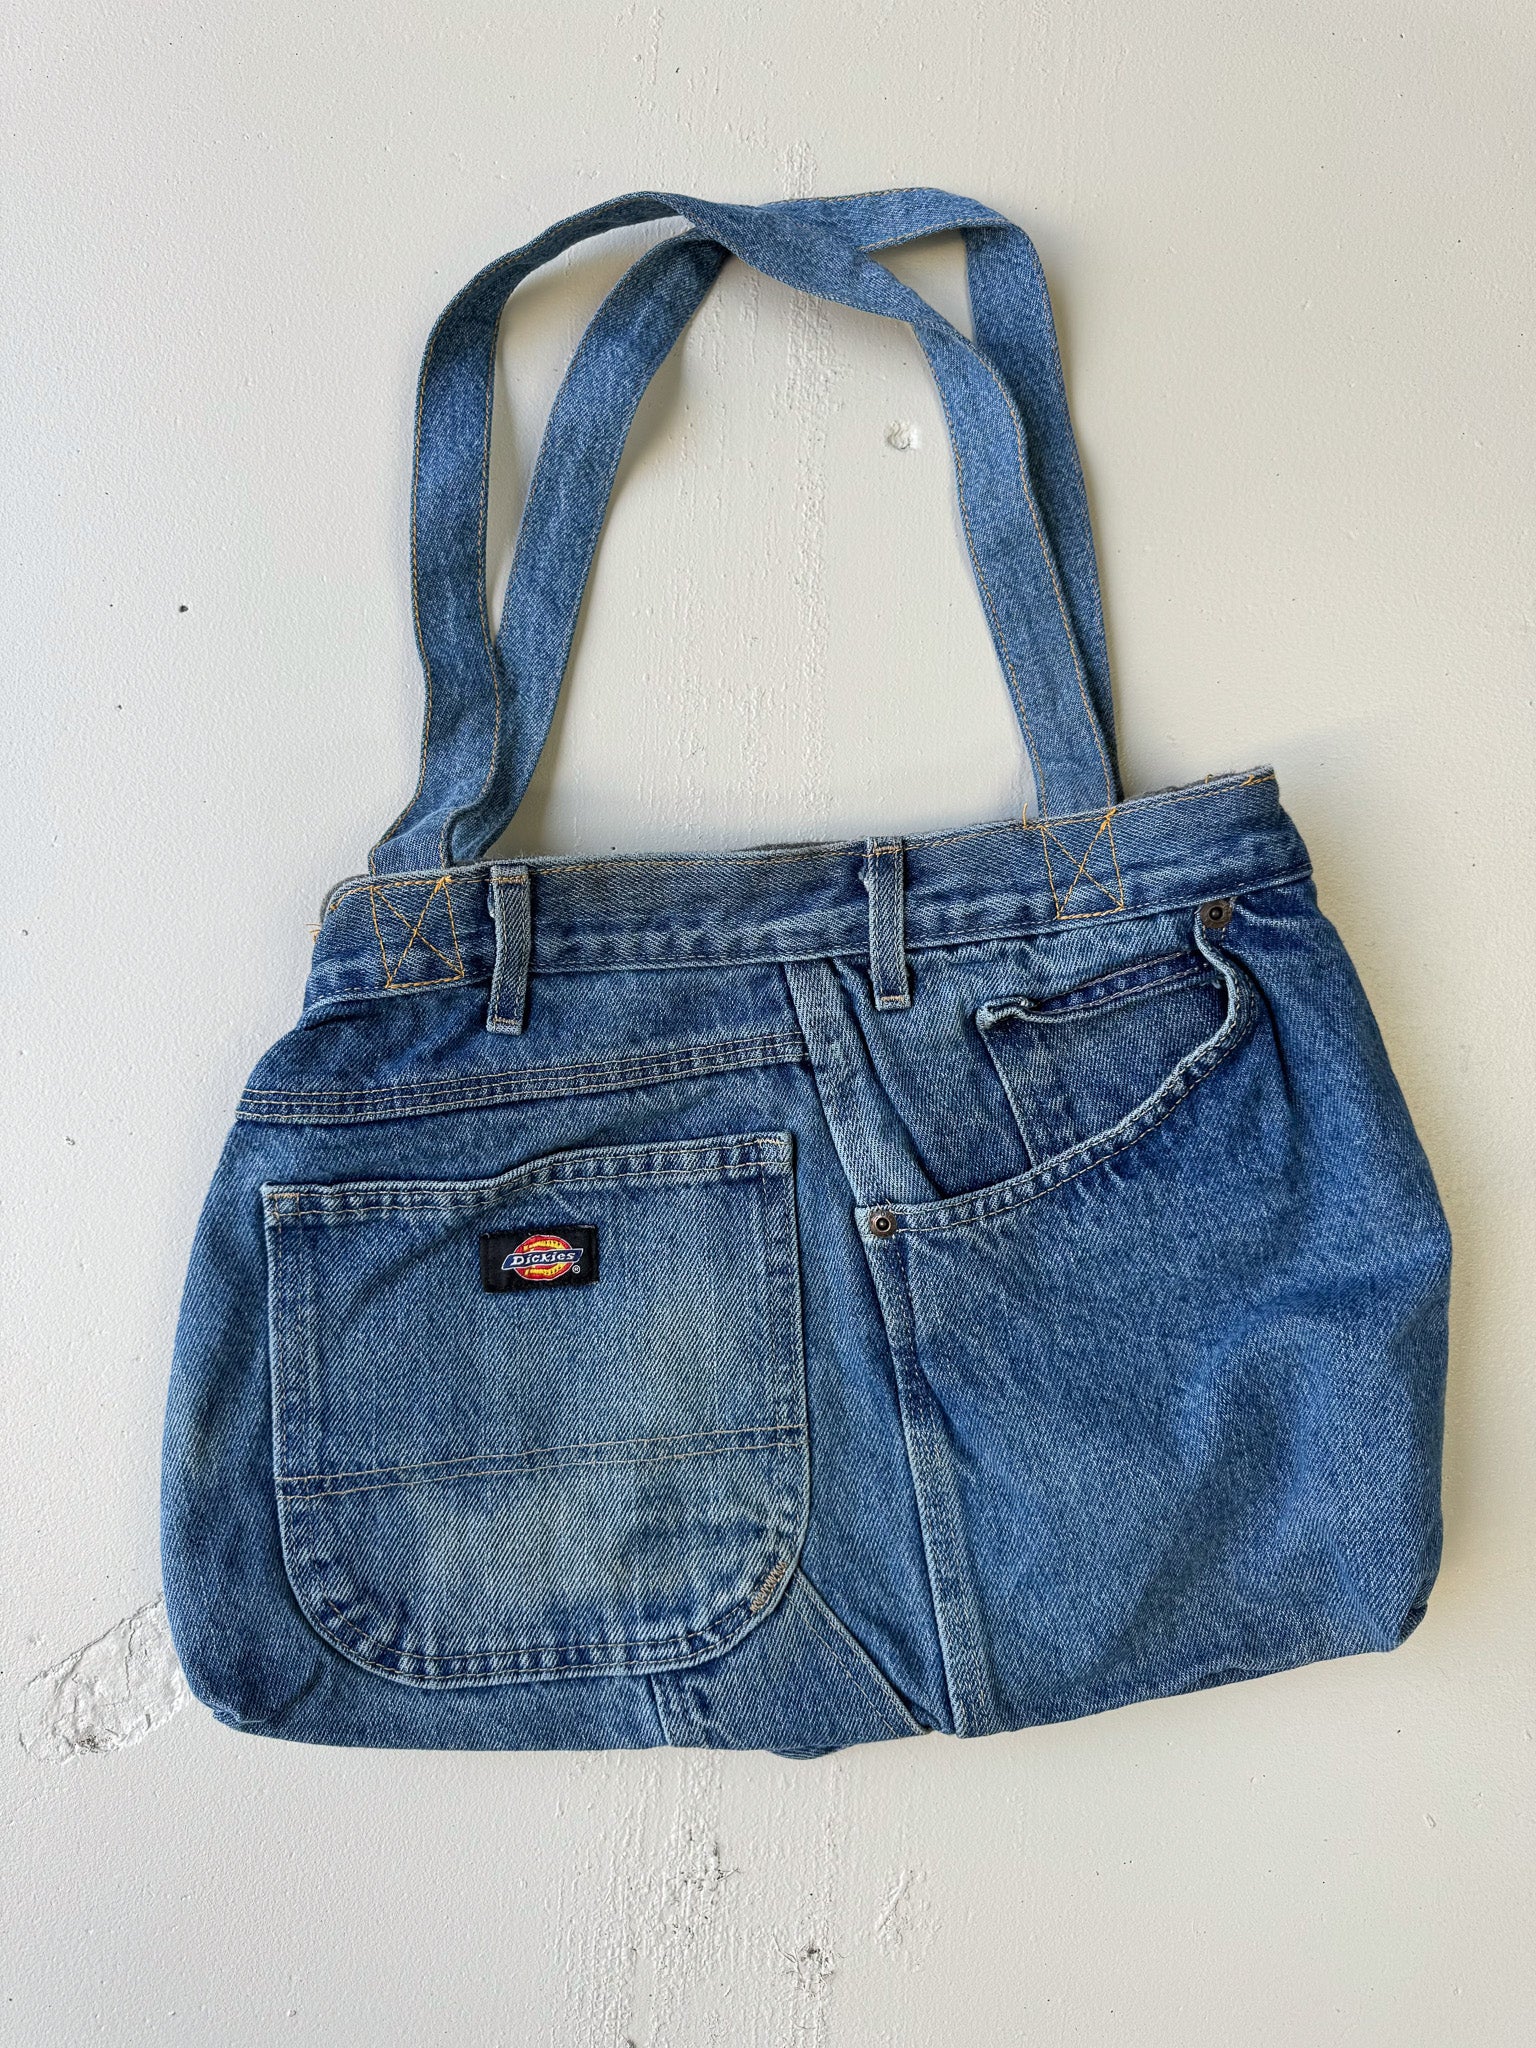 Dickies - Handmade Bag